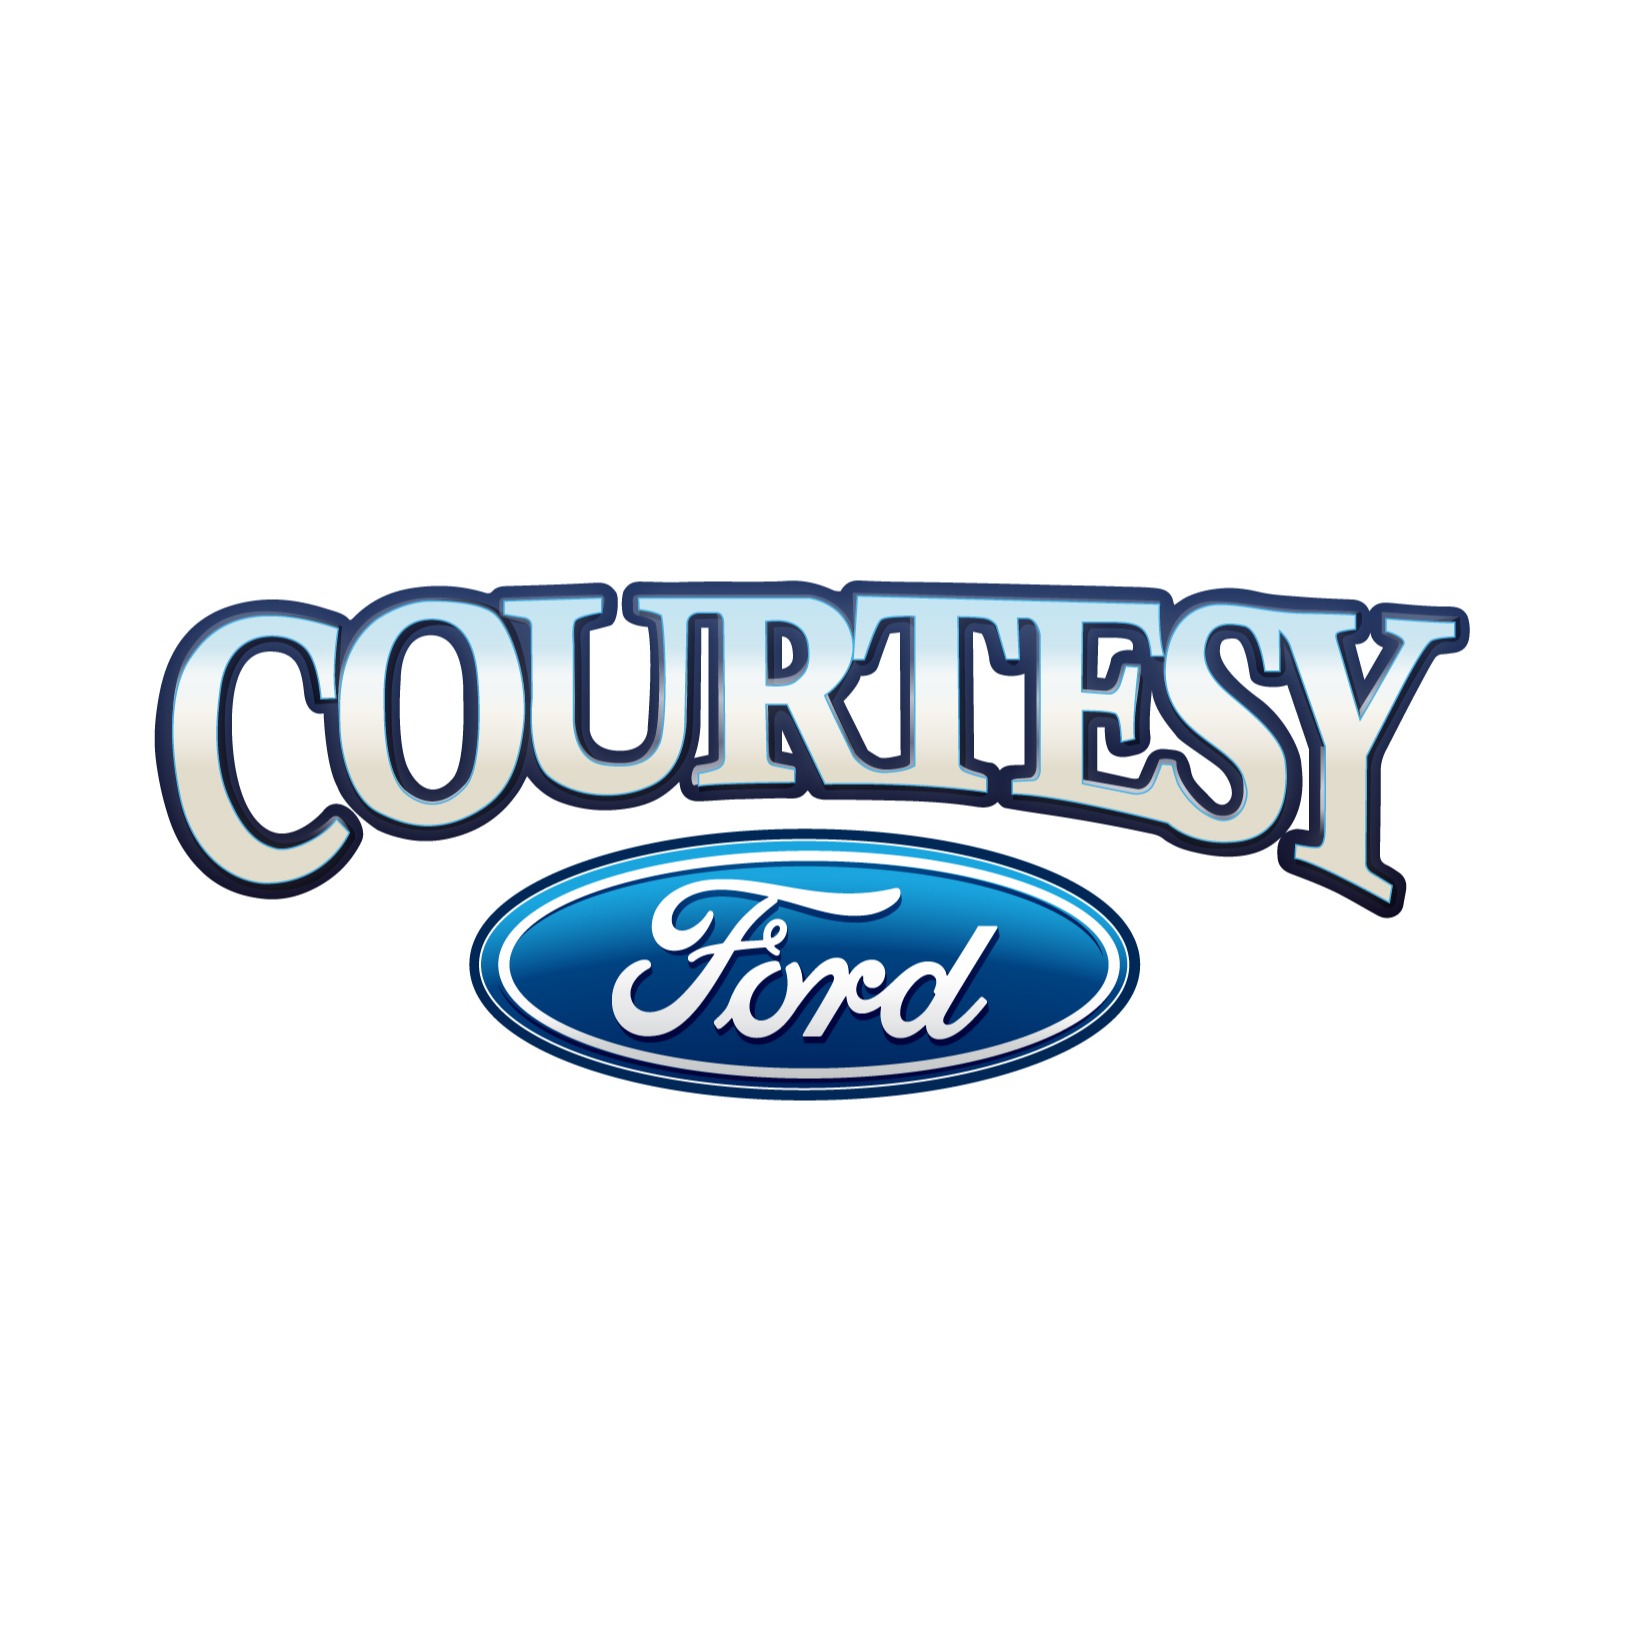 Courtesy Ford Logo